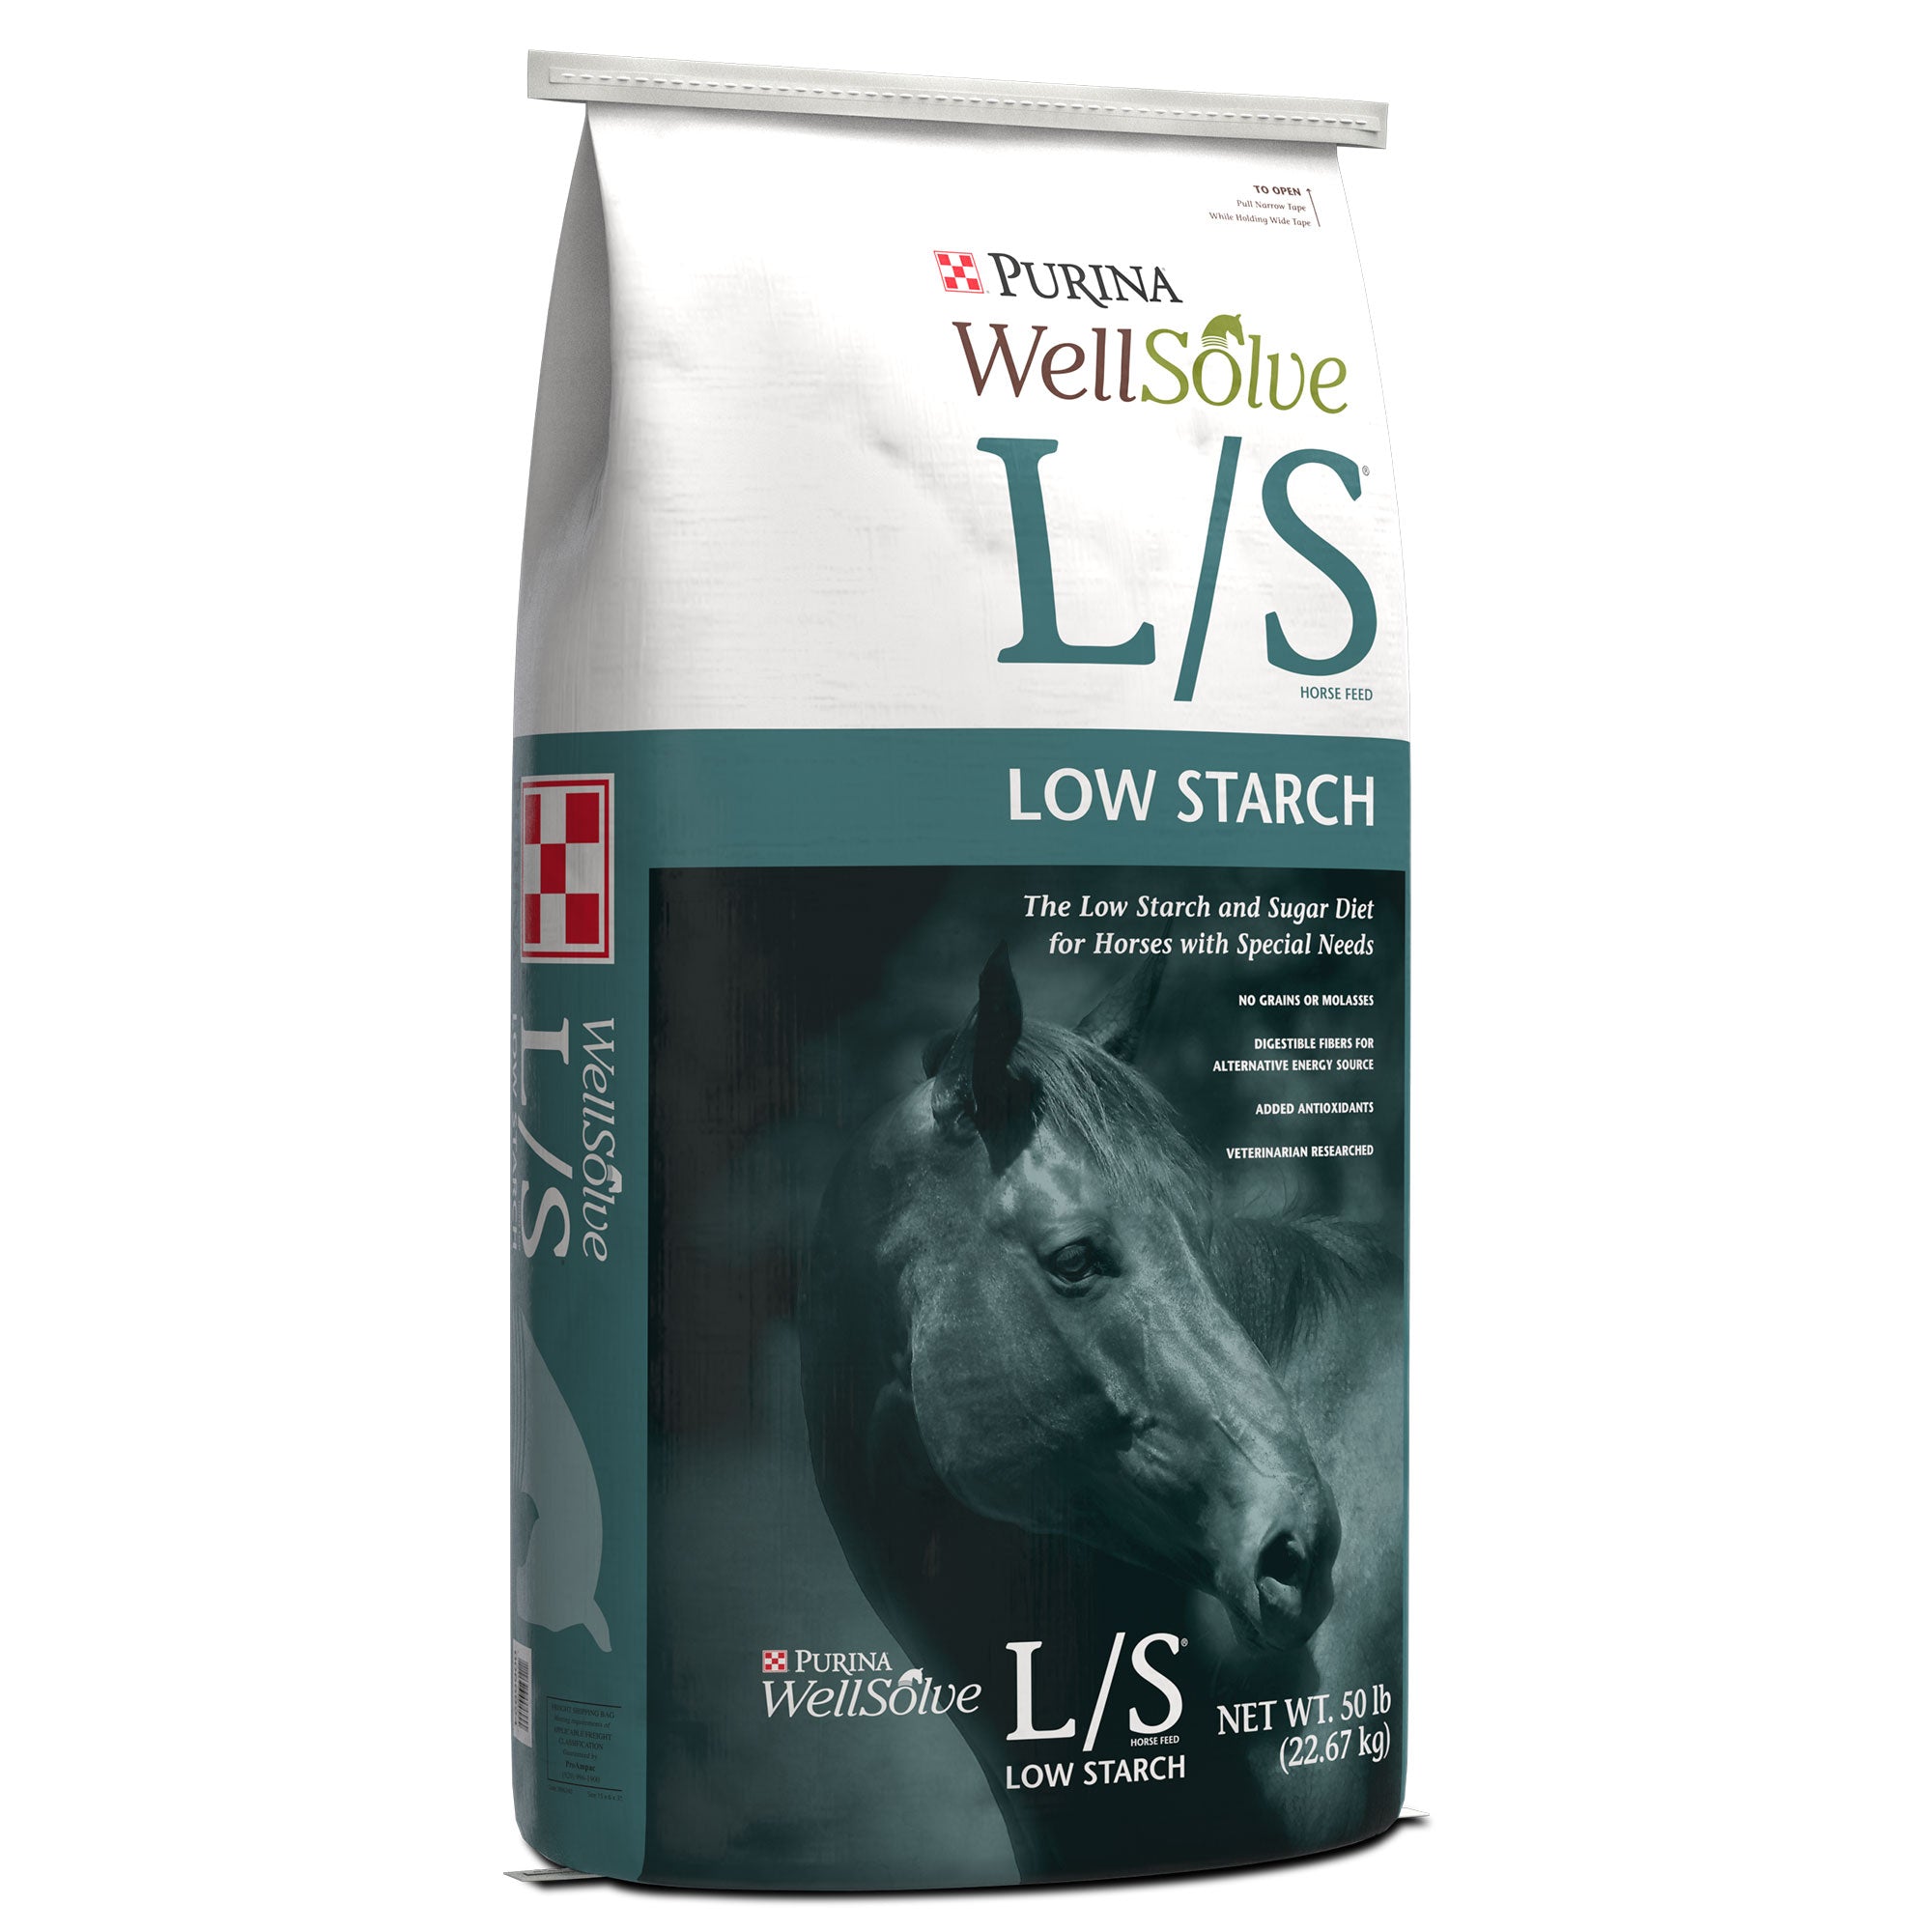 Purina® WellSolve L/S® Horse Feed